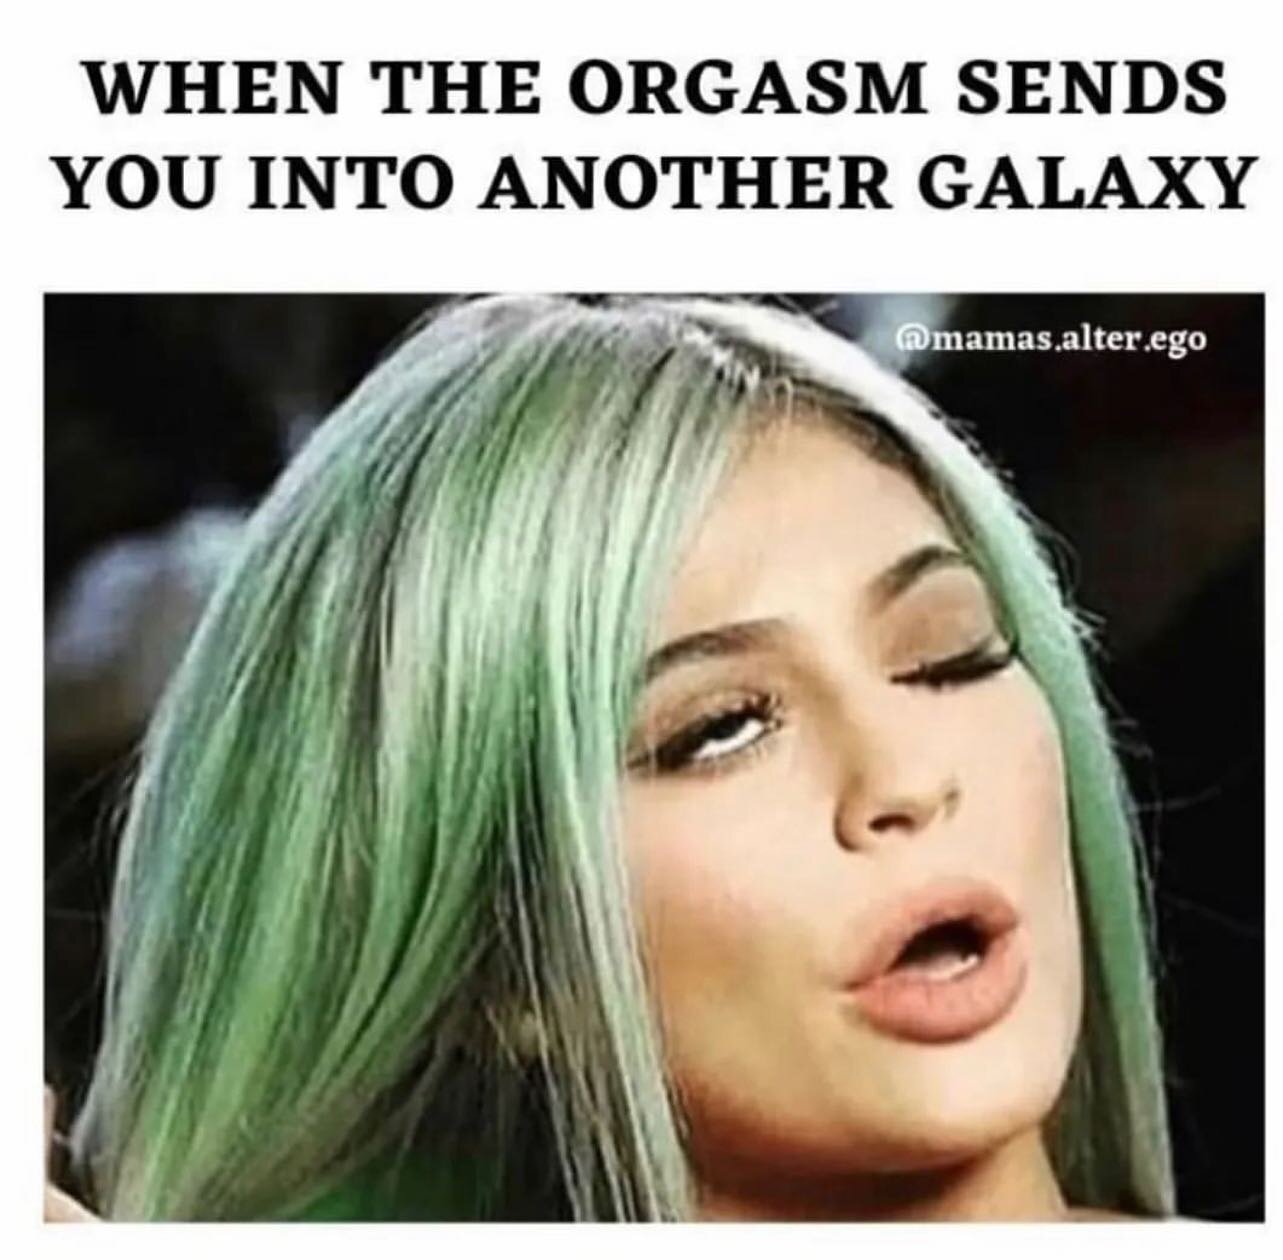 More orgasms for everyone! #orgasm #selfpleasure #prioritizepleasure #youdoyou #vibrators